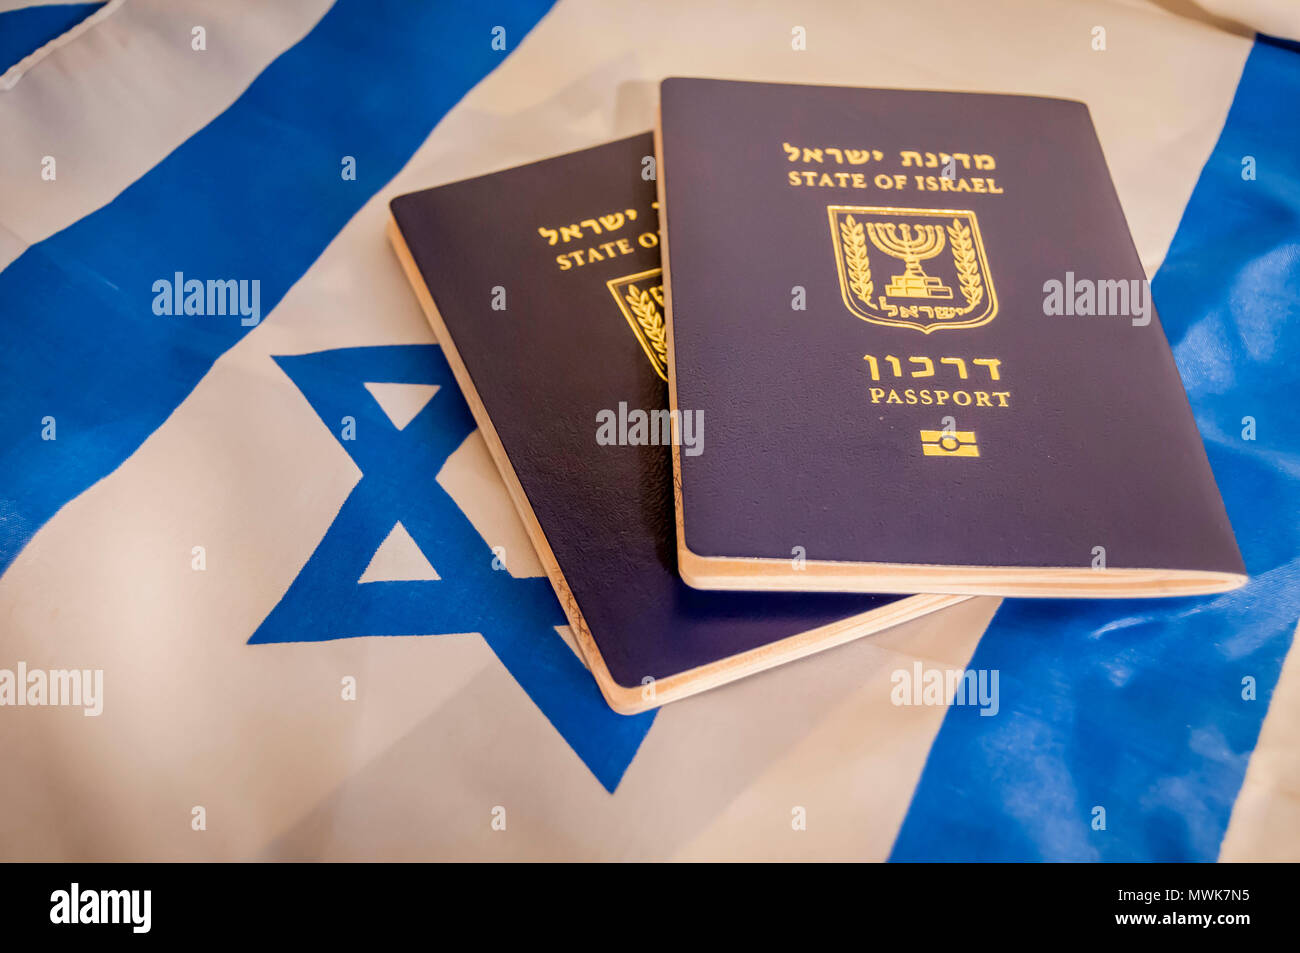 State Of Israel Passport Stock Image Two Israeli Darkon